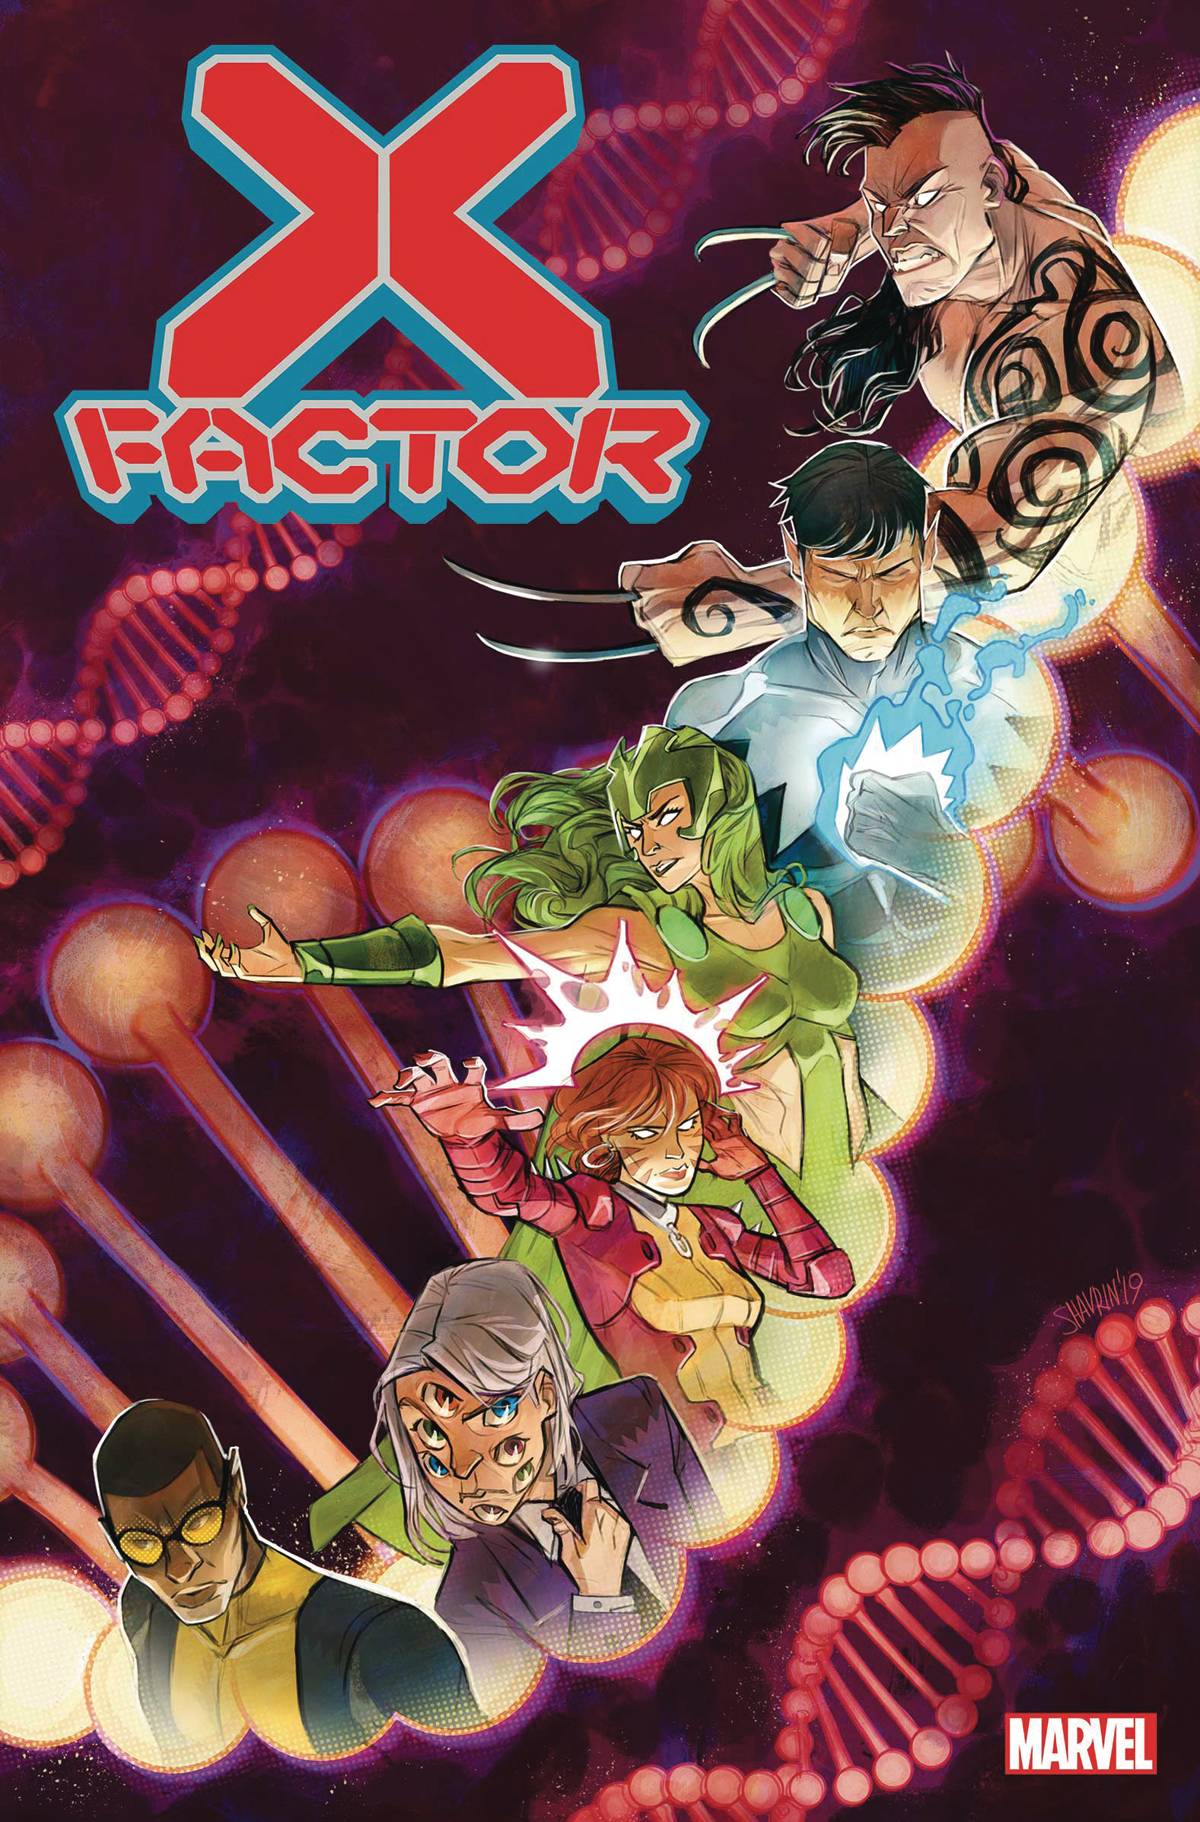 X-FACTOR #1 | Game Master's Emporium (The New GME)